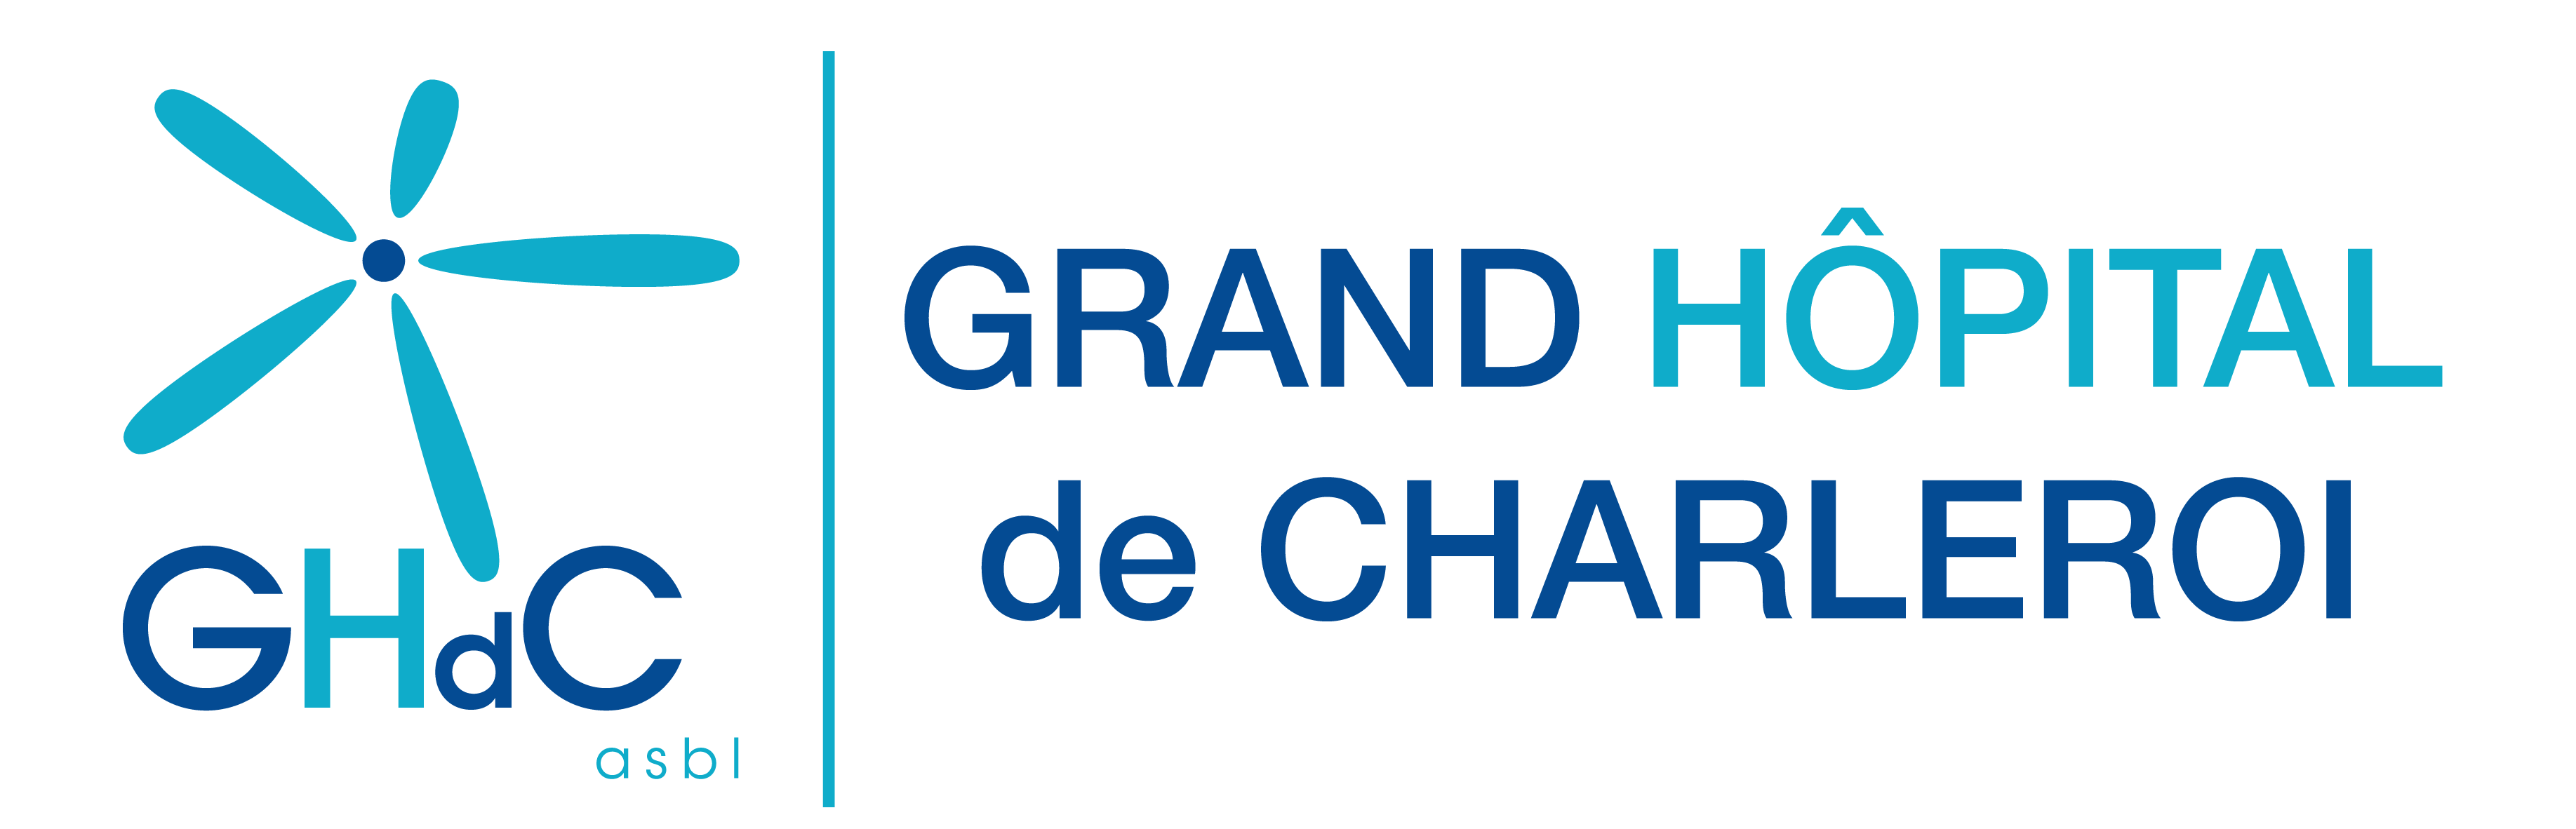 grand hopital de charleroi logo